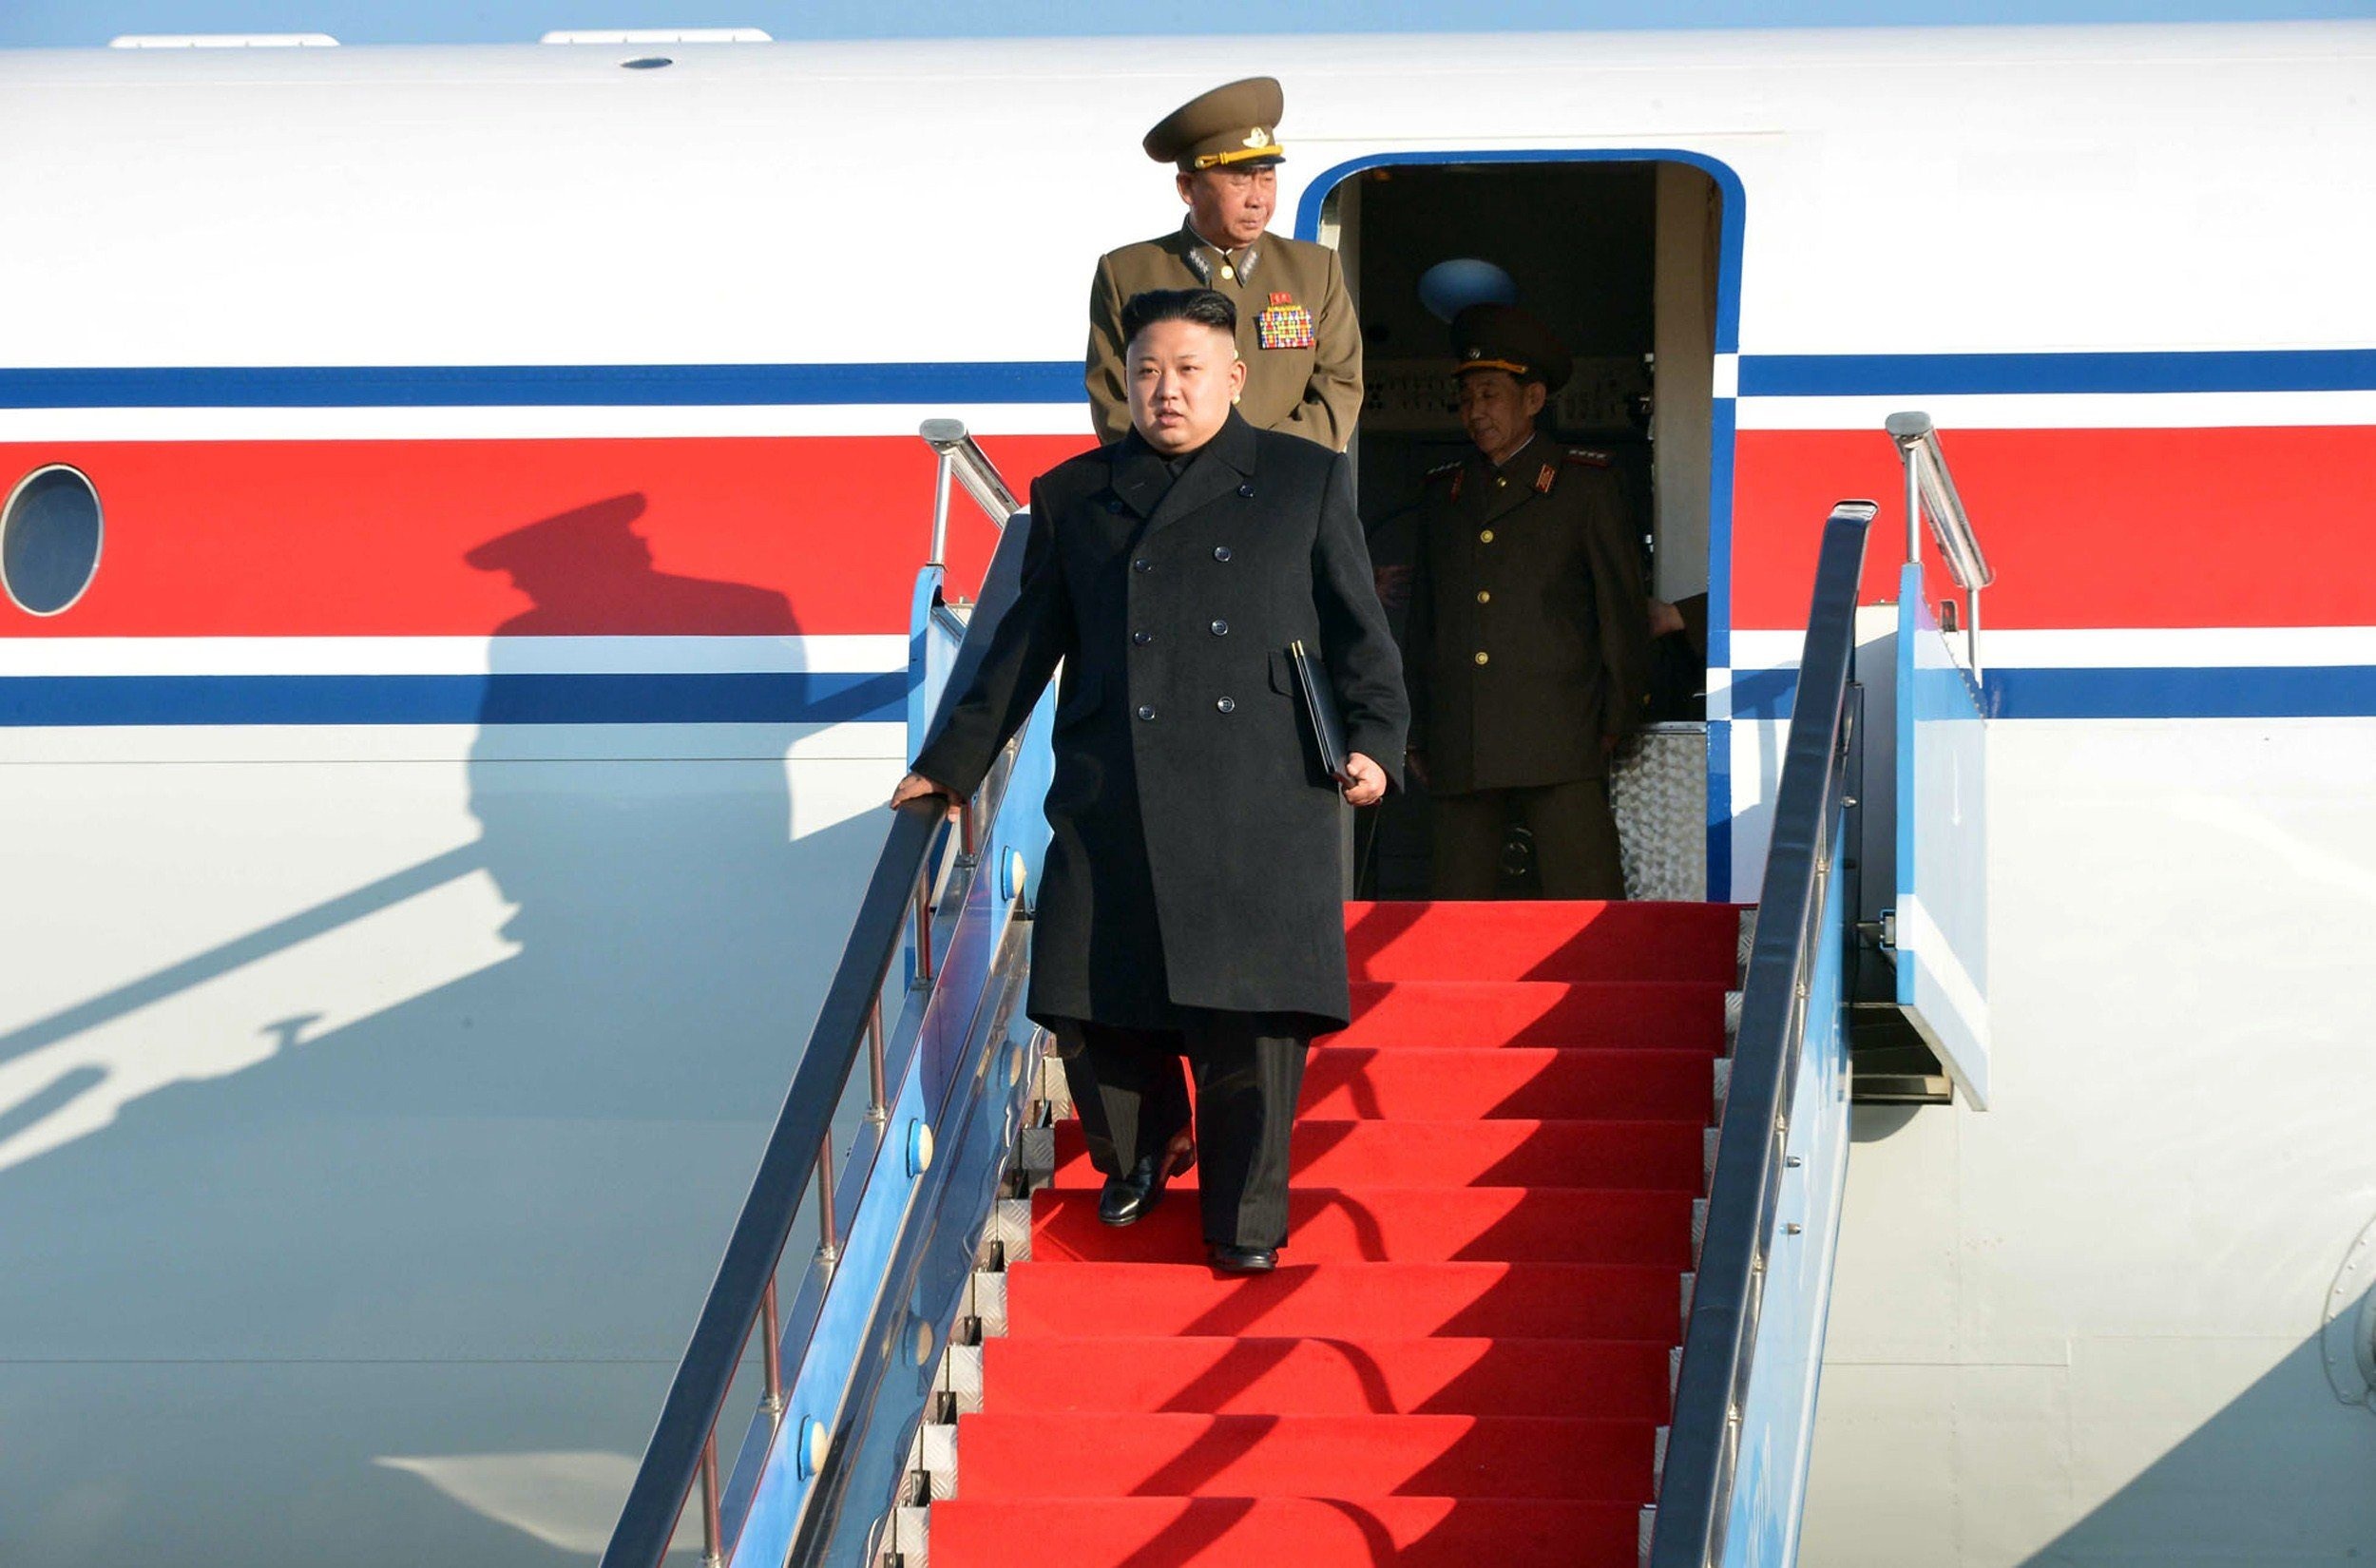 North Korean leader Kim Jong-Un arriving at the Samjiyong airport in Ryaggang province in North Korea, April 1, 2014. (KCNA/AFP/Getty Images)